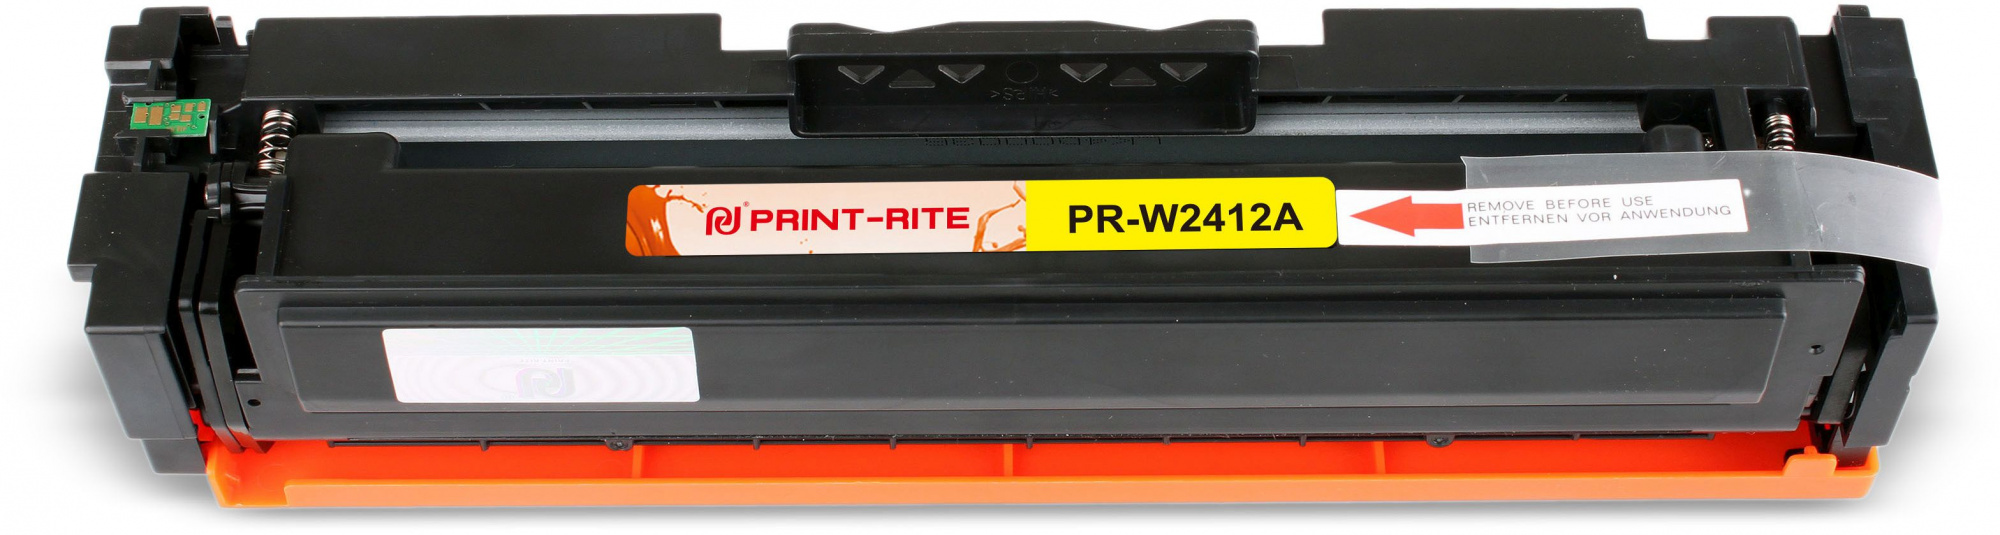   Print-Rite TFHBB6YPU1J PR-W2412A W2412A  (850.)  HP Color LJ Pro M155/MFP M182nw/M183fw